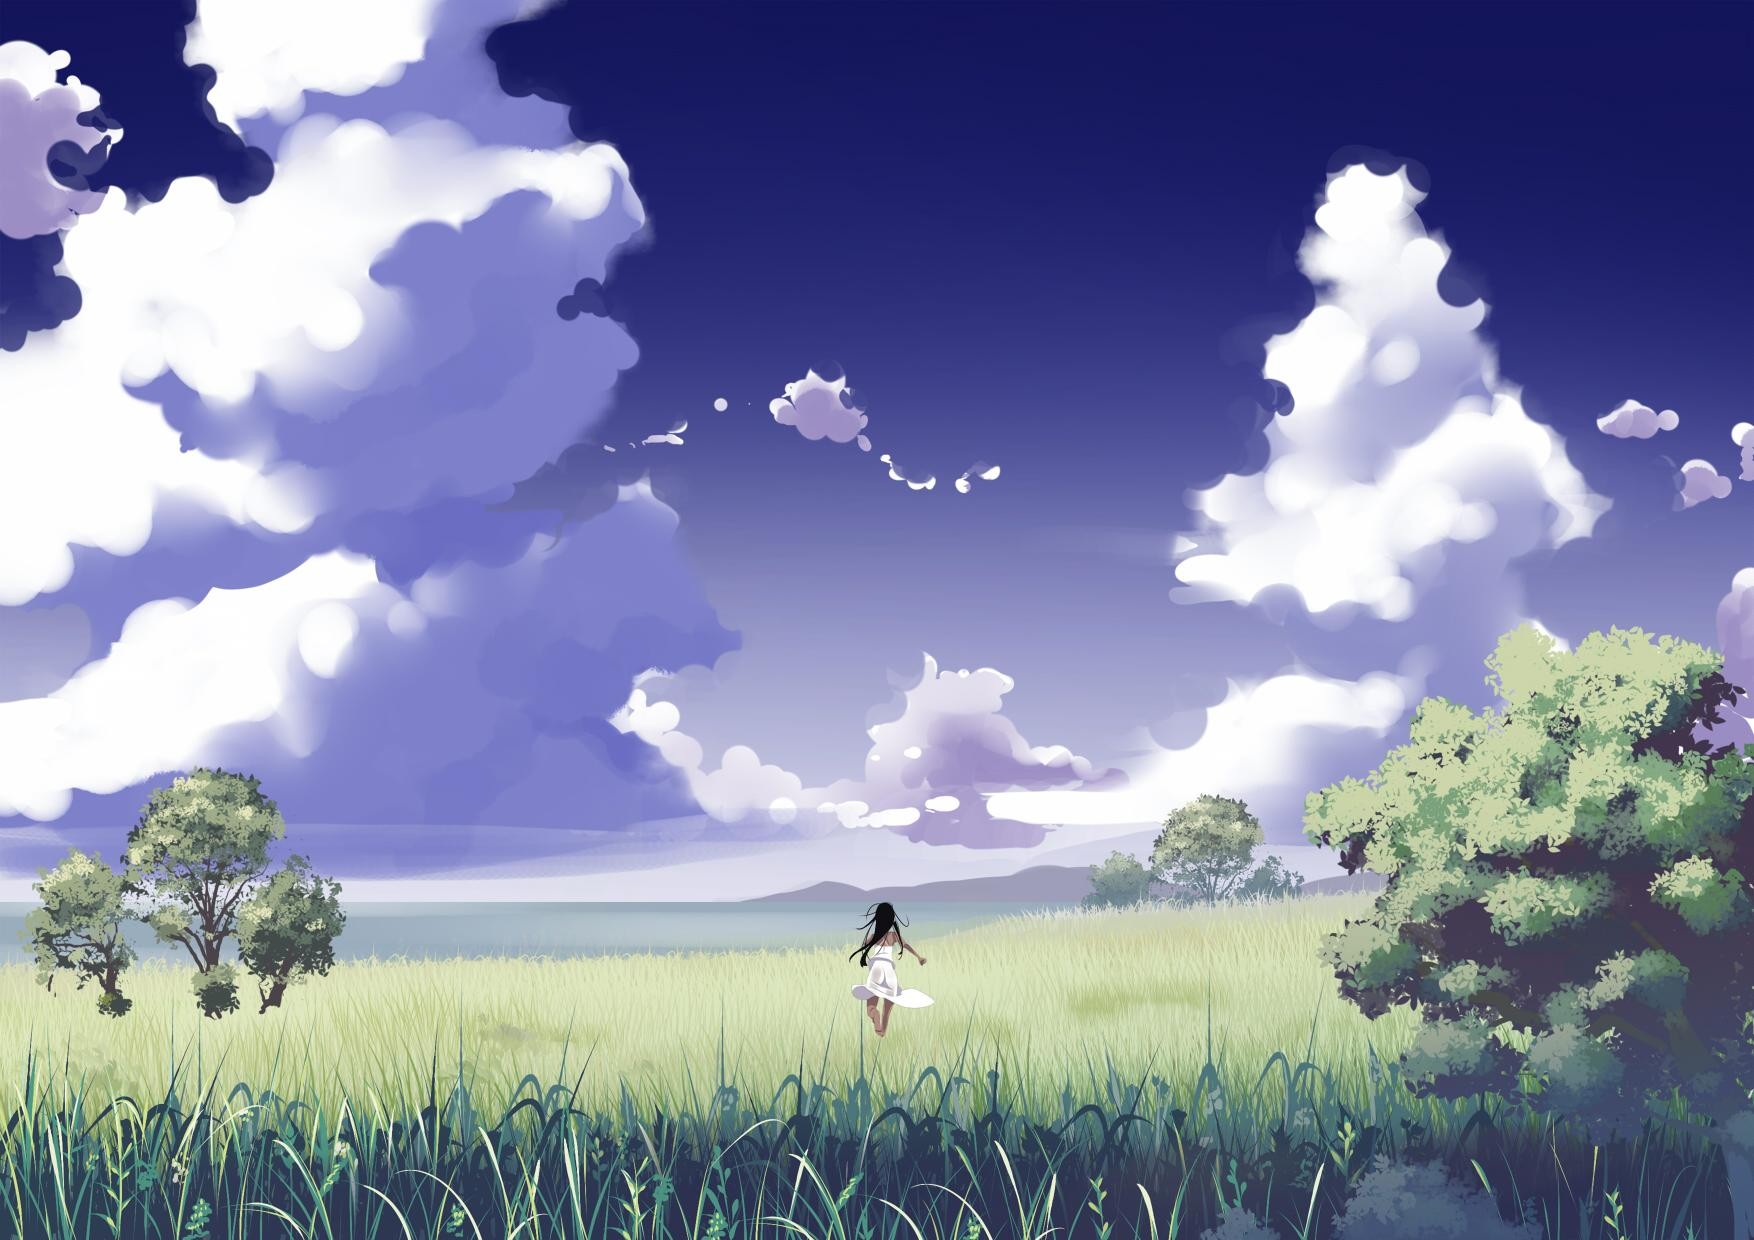 anime nature wallpaper,sky,natural landscape,people in nature,nature,grassland